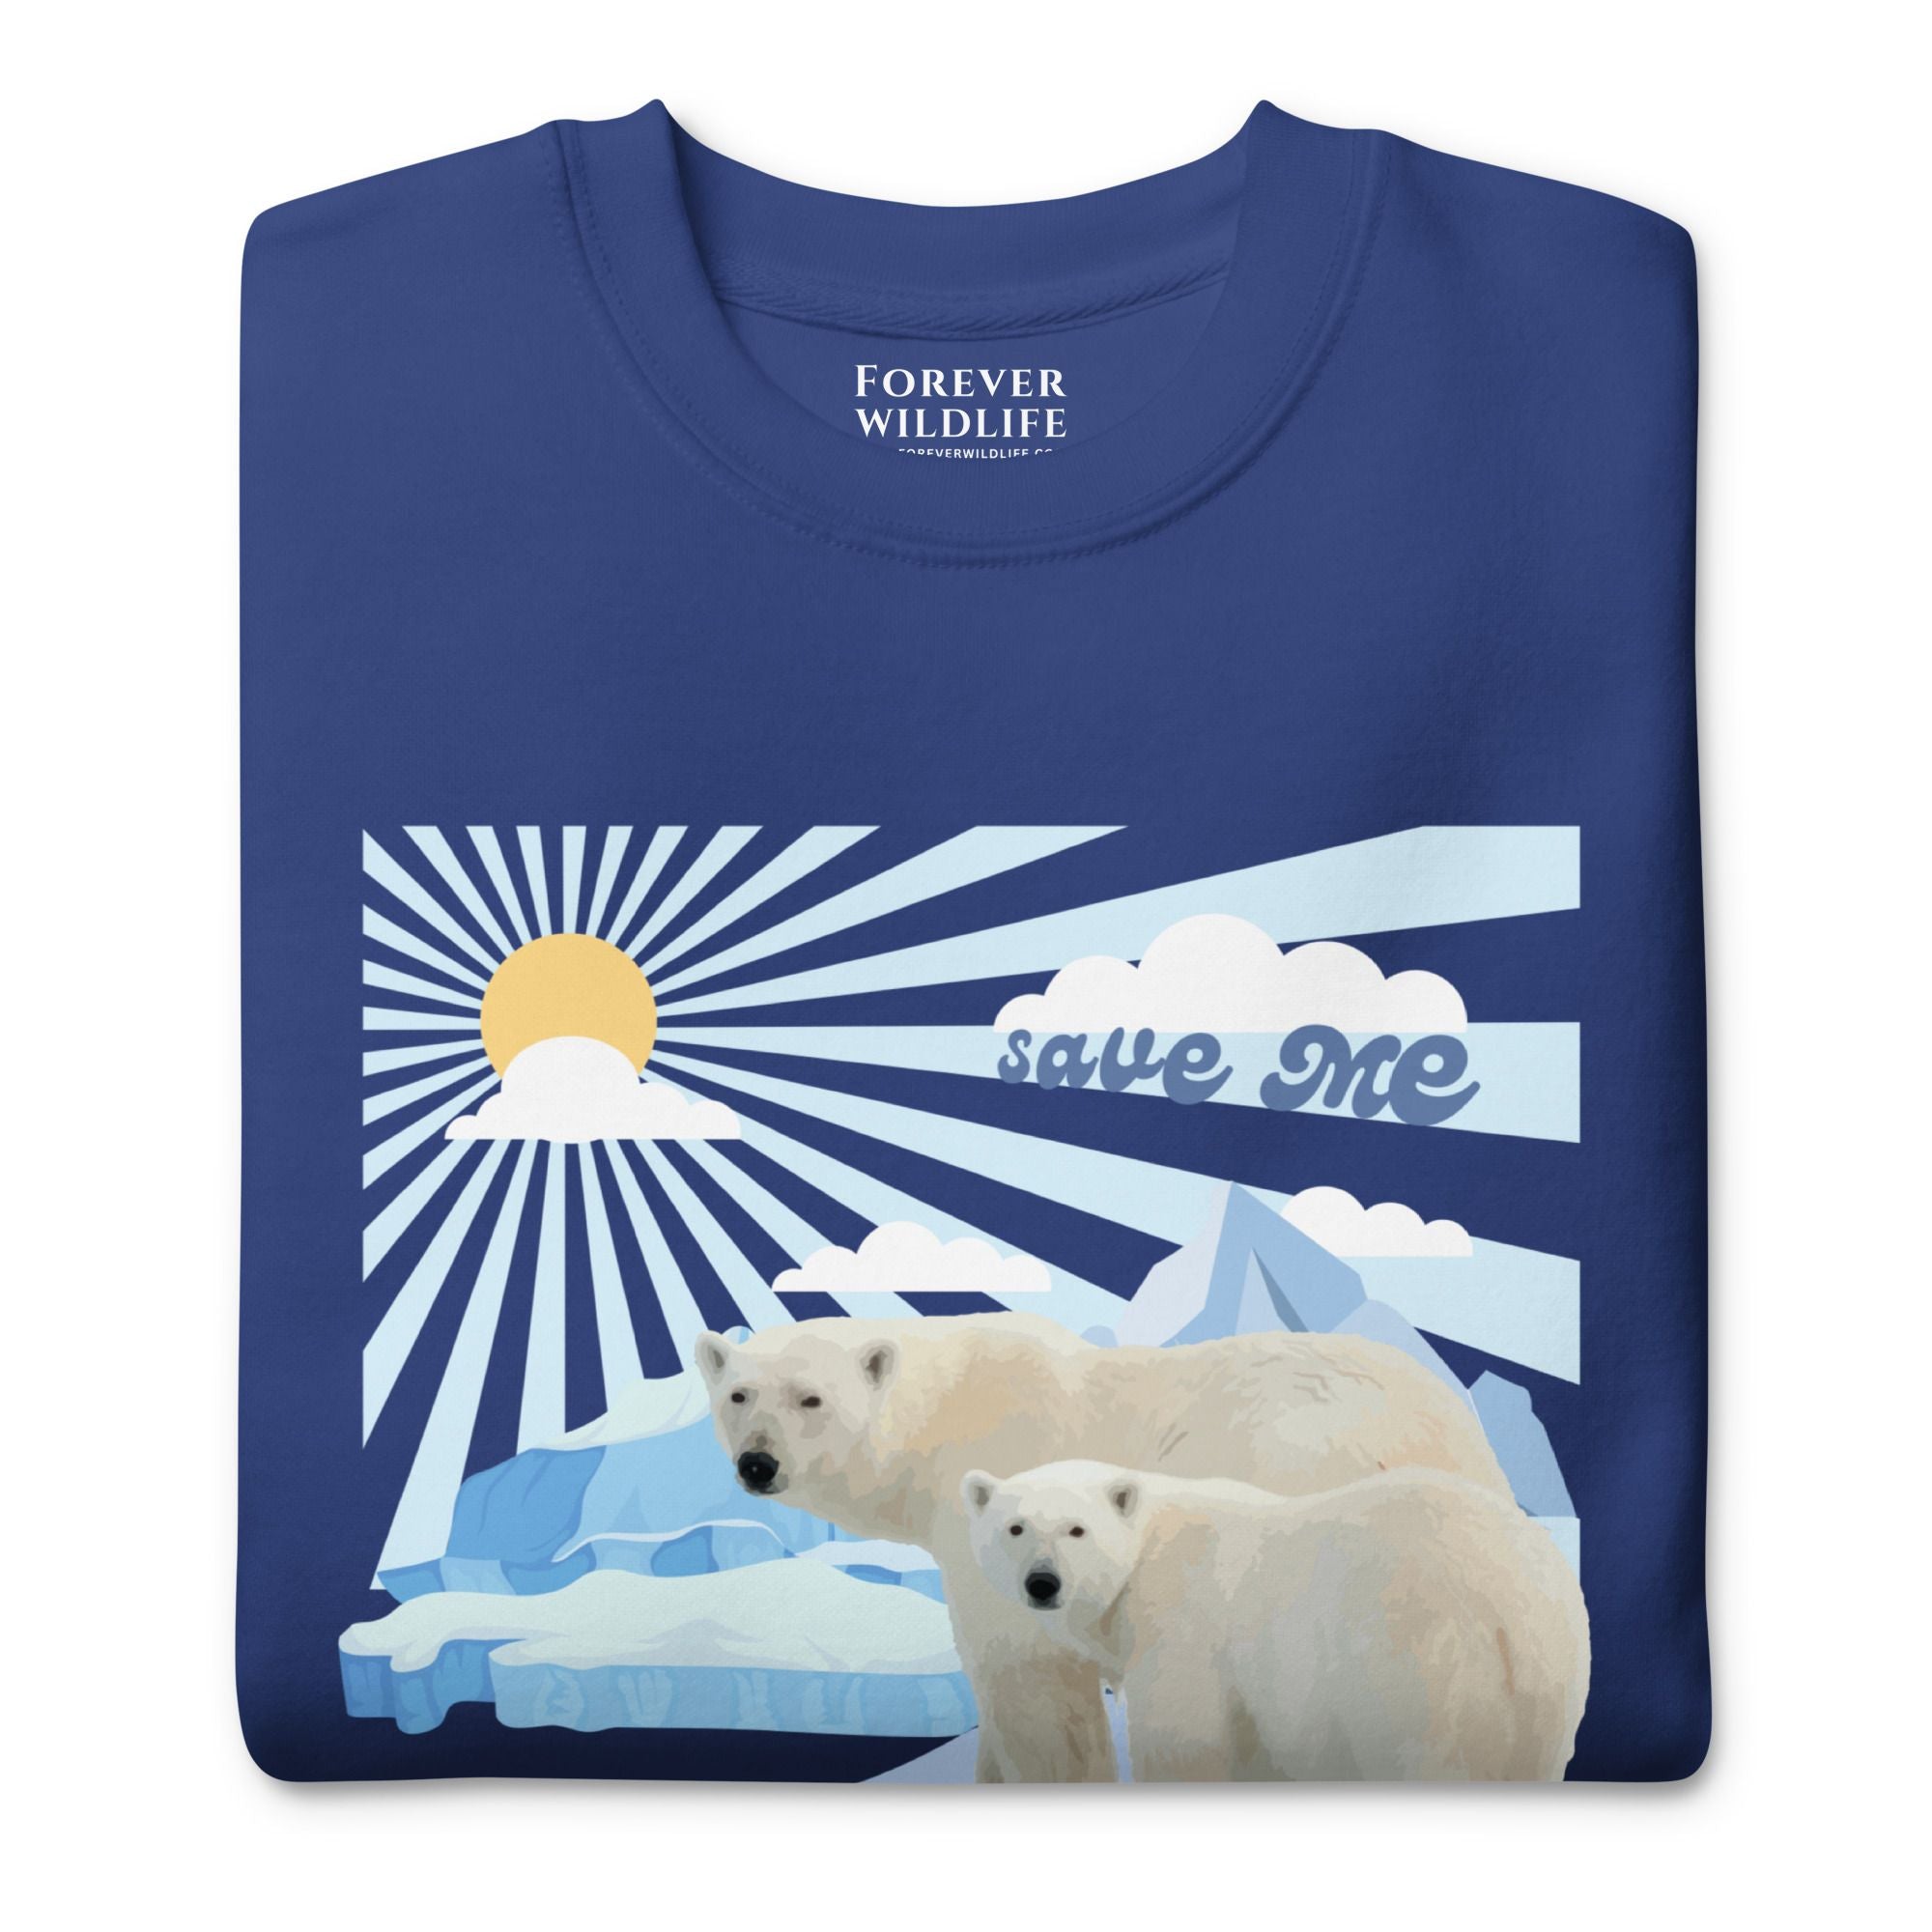 Polar Bears Sweatshirt in Royal-Premium Wildlife Animal Inspiration Sweatshirt Design with 'Save Me' text, part of Wildlife Sweatshirts & Clothing from Forever Wildlife.